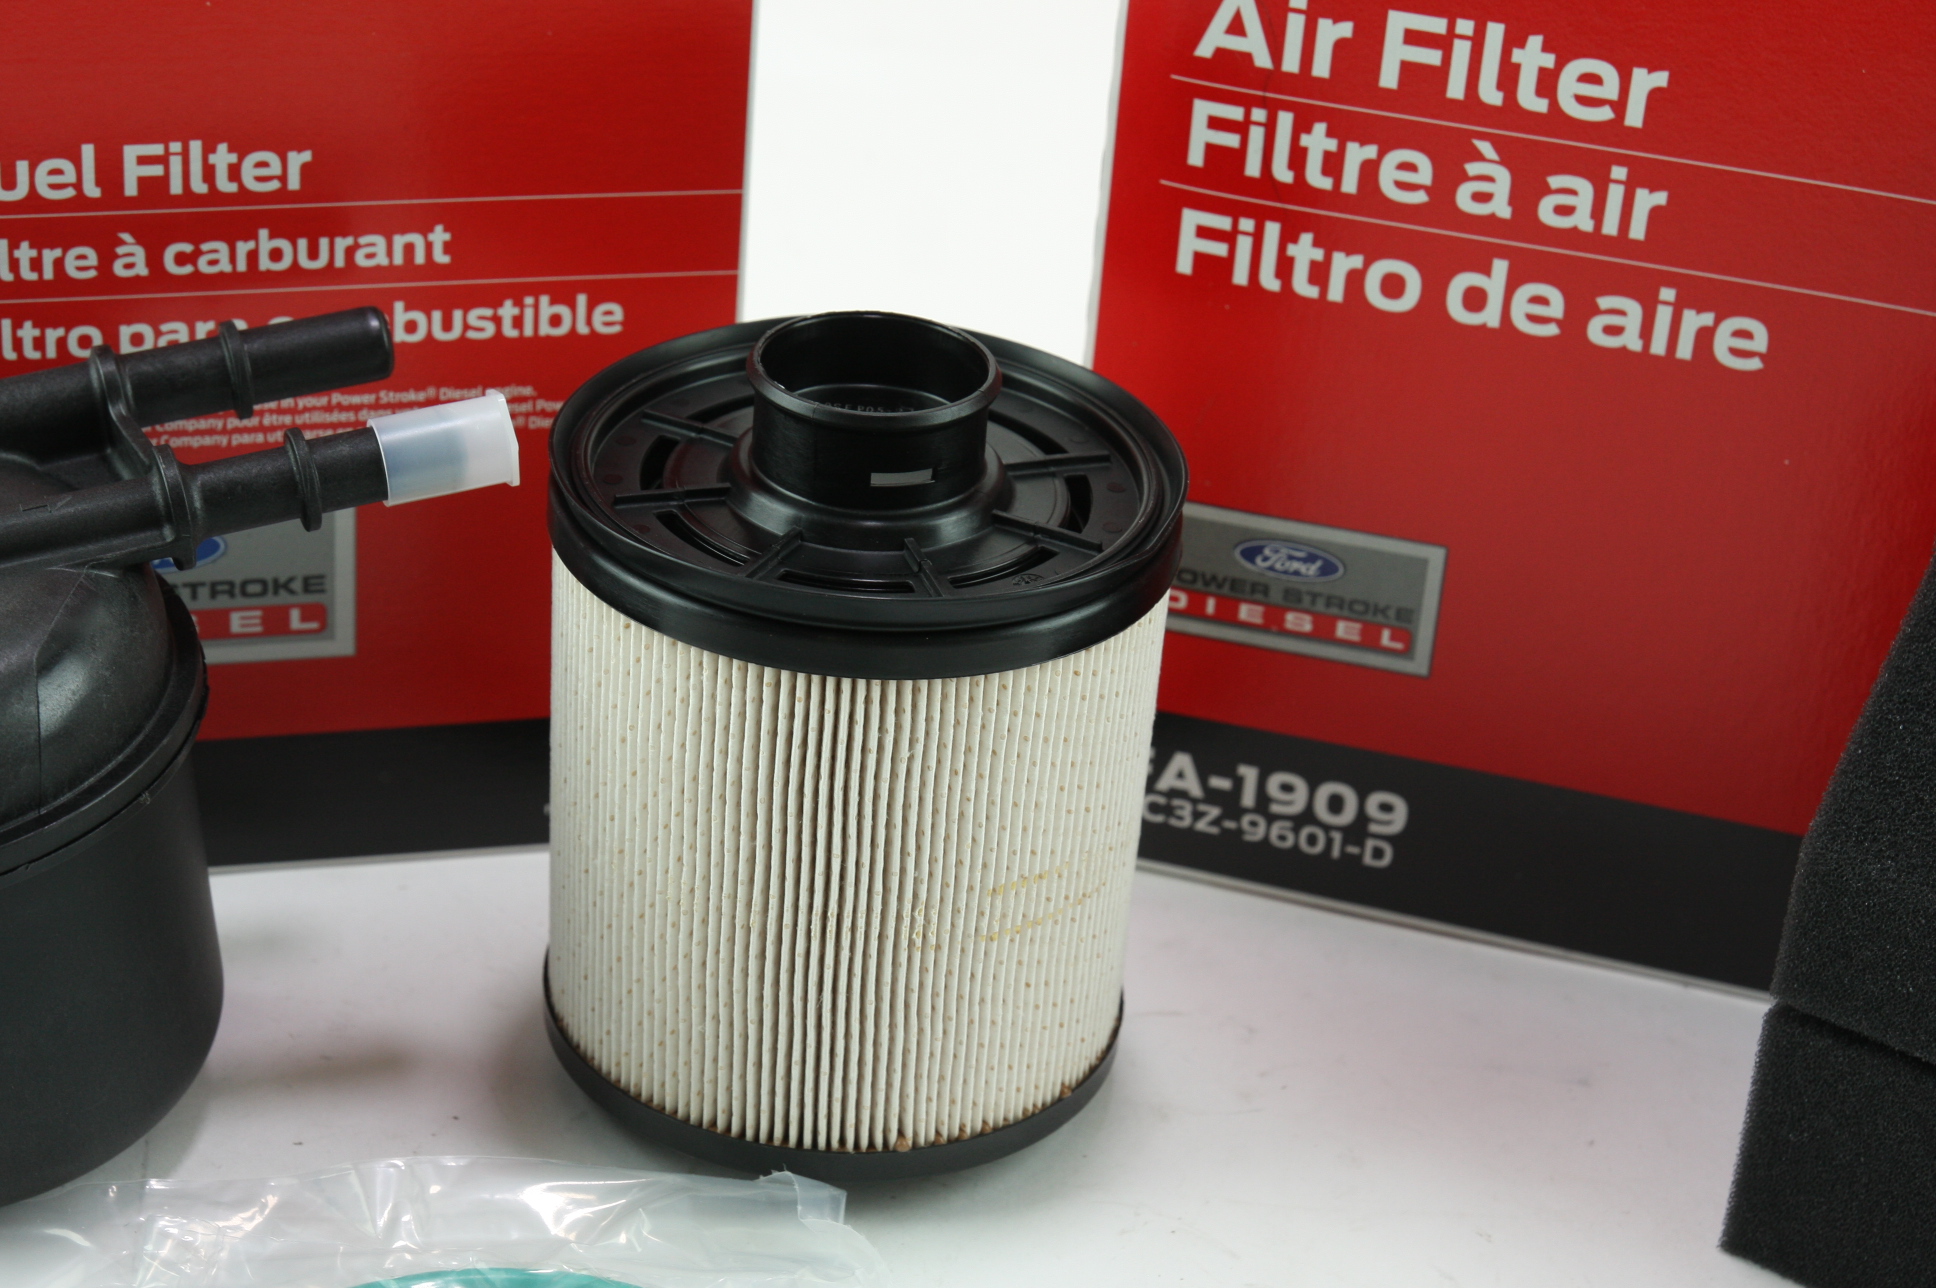 * Diesel Fuel & Air Filter Kit Motorcraft FD4615 FA1909 Genuine OEM Ford Filters - image 3